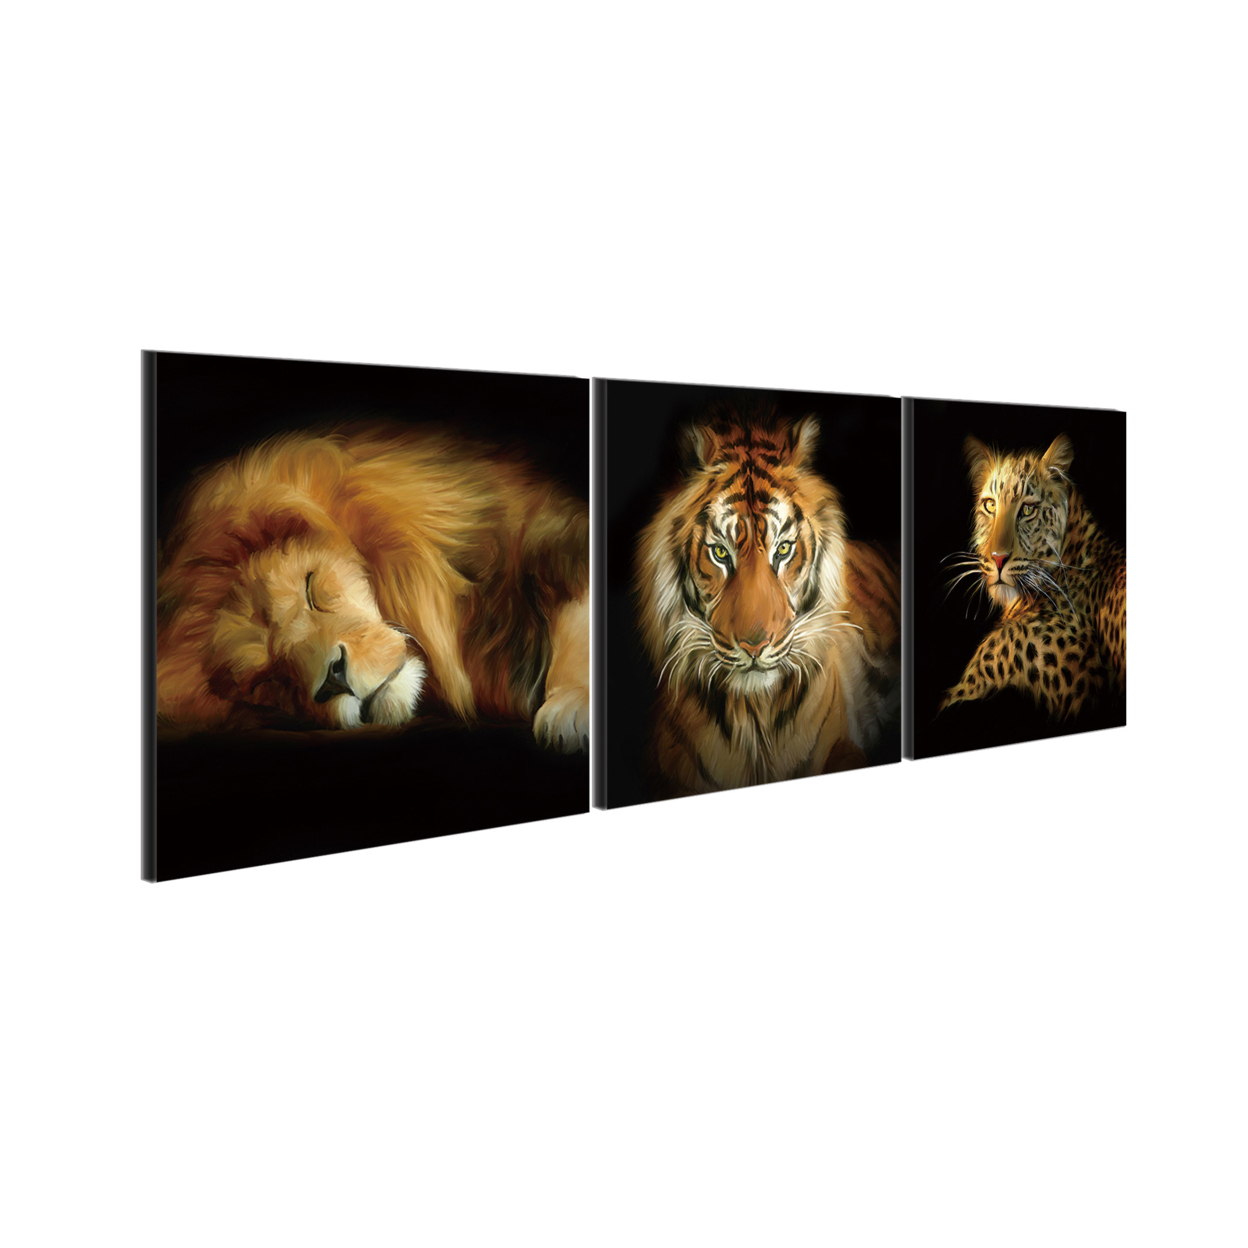 Wild Safari 3 Piece Wrapped Canvas Wall Art Print 27.5x82.5 Inches